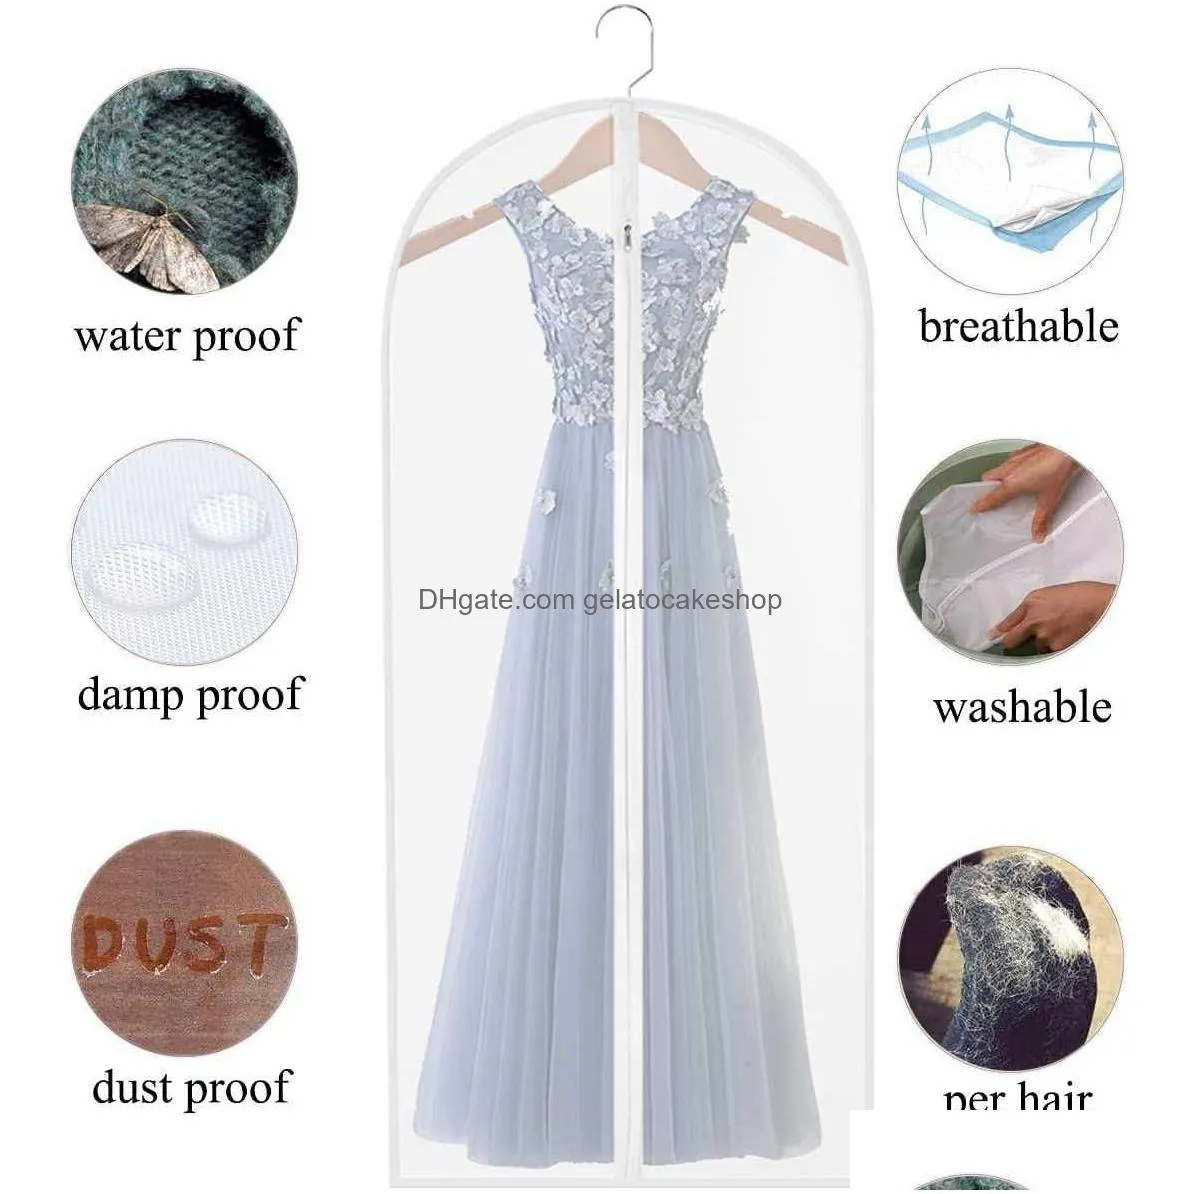  peva dress clothes cover long dress suit jacket white transparent hanging dust cover home wardrobe clothes storage bag